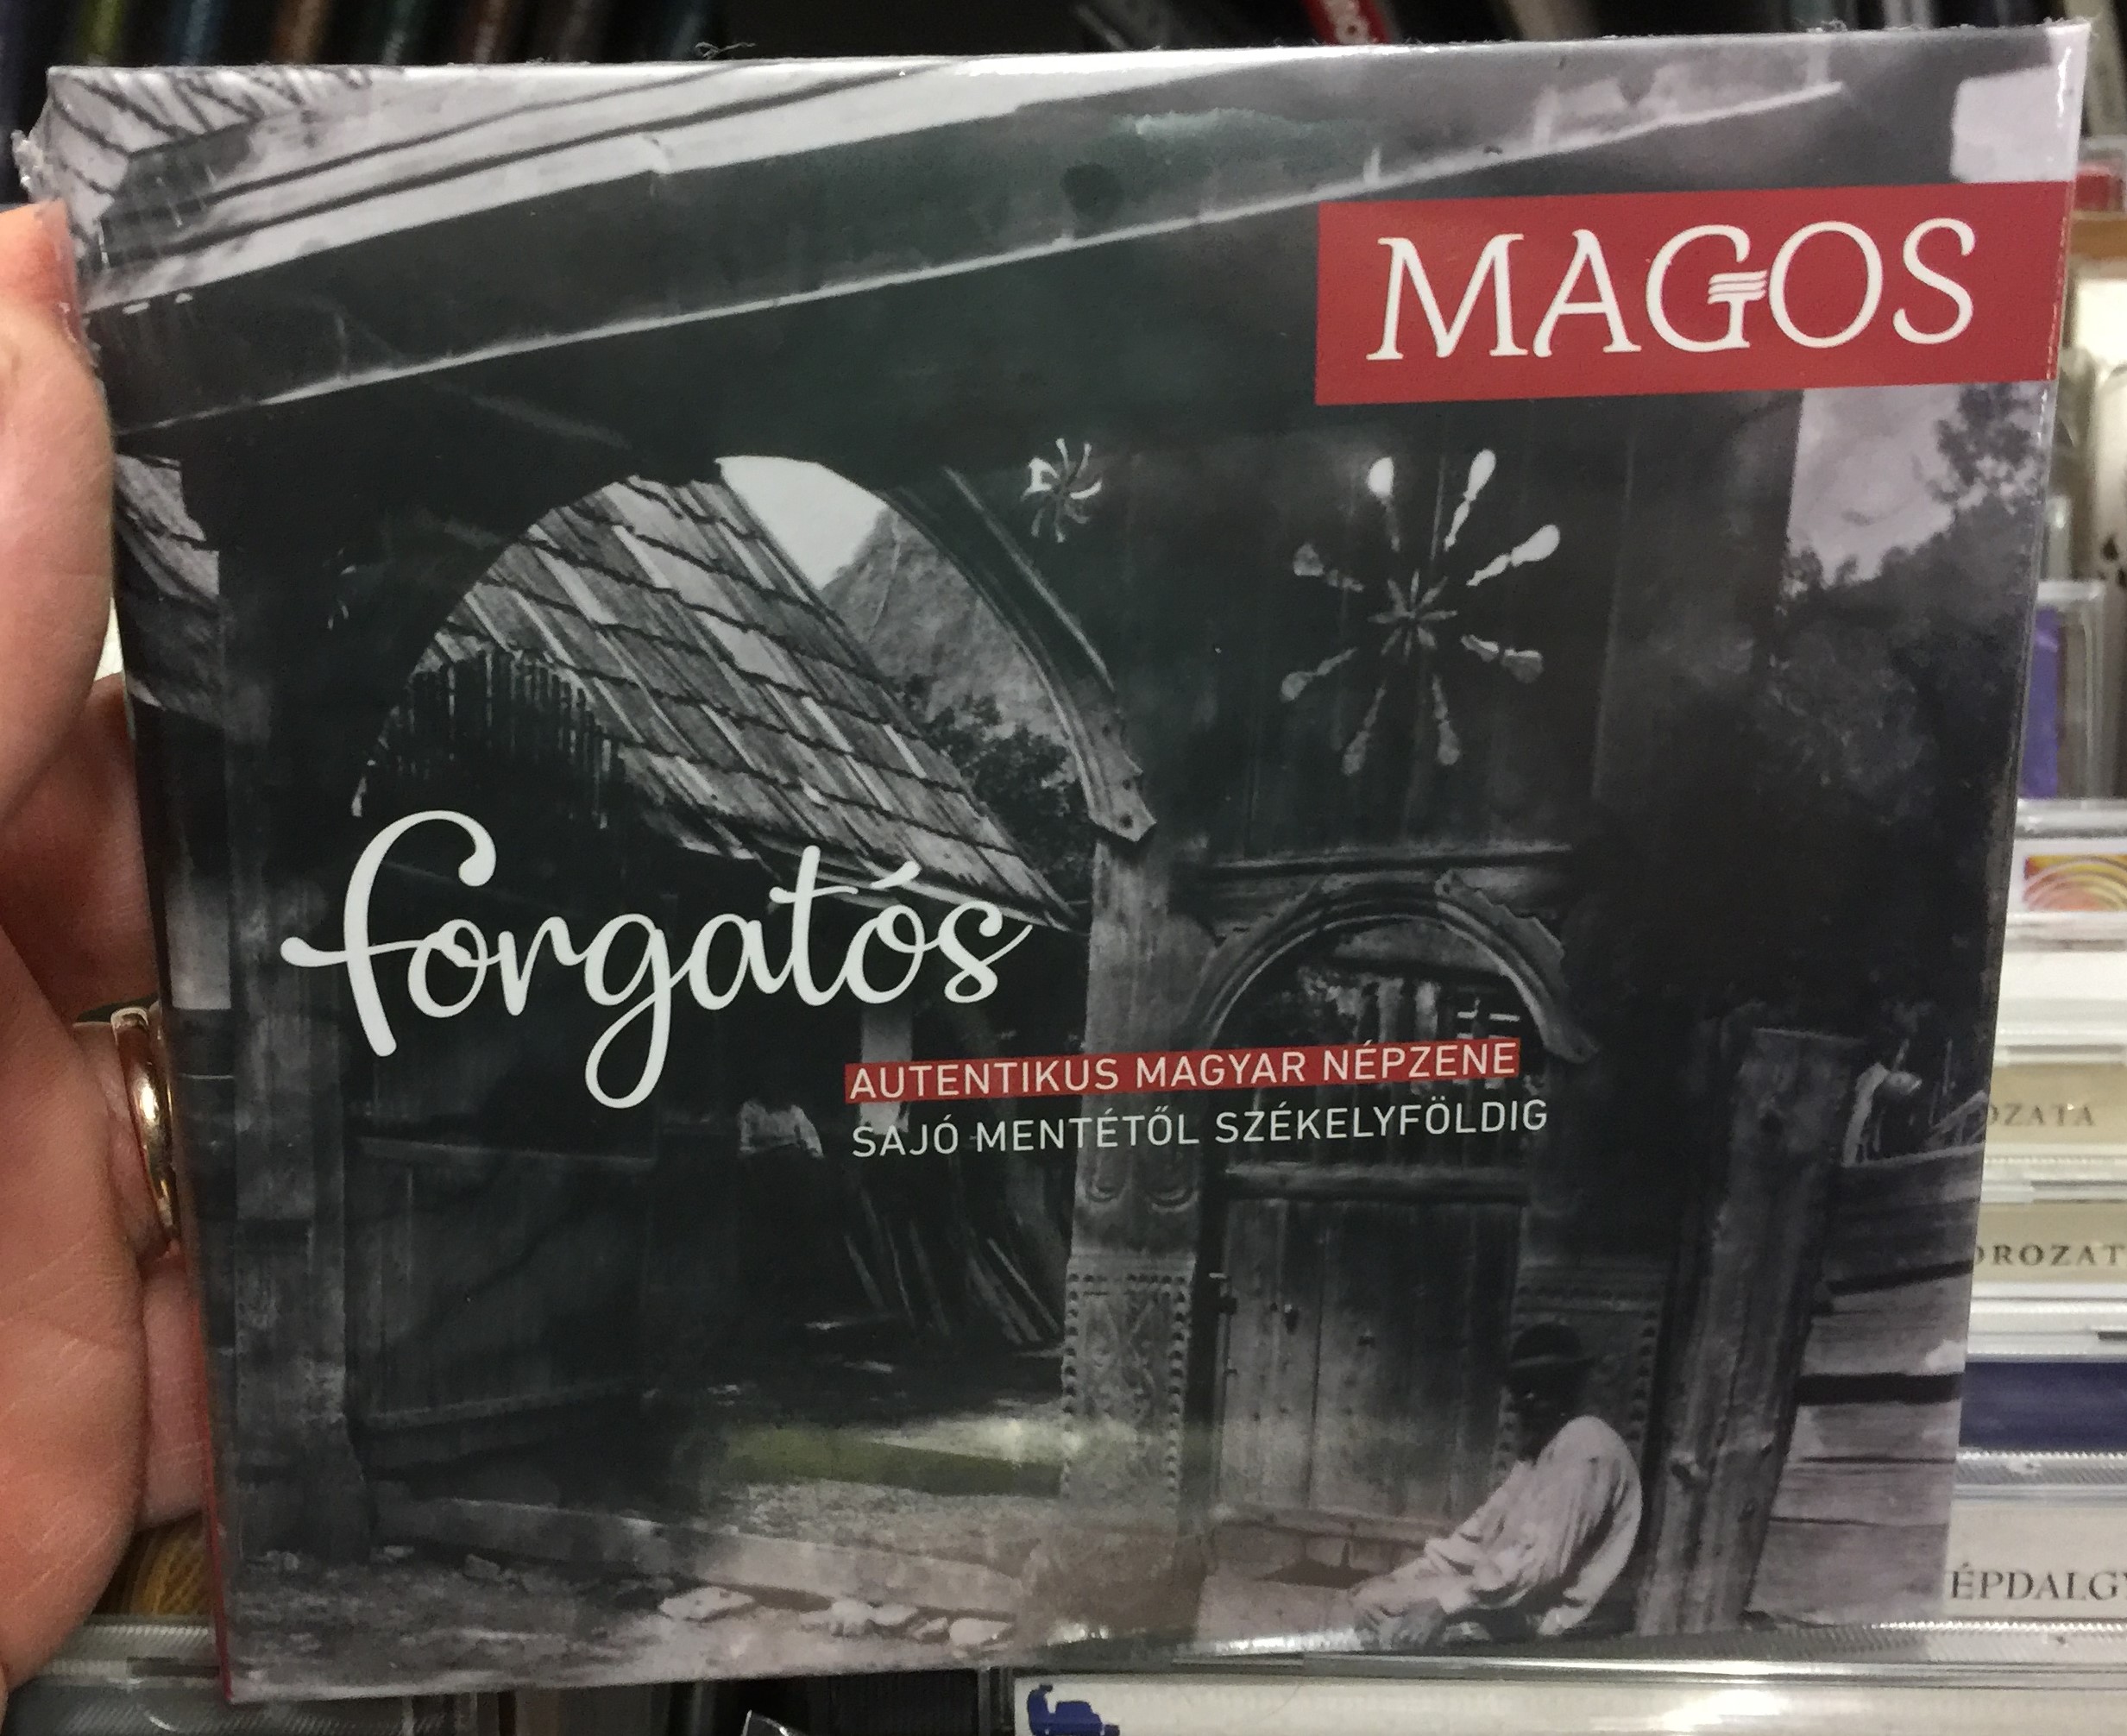 magos-forgat-s-autentikus-magyar-n-pzene-saj-ment-t-l-sz-kelyf-ldig-authentic-hungarian-folk-music-from-the-river-saj-area-to-sz-kelyf-ld-fon-records-audio-cd-2018-fa-410-2-1-.jpg